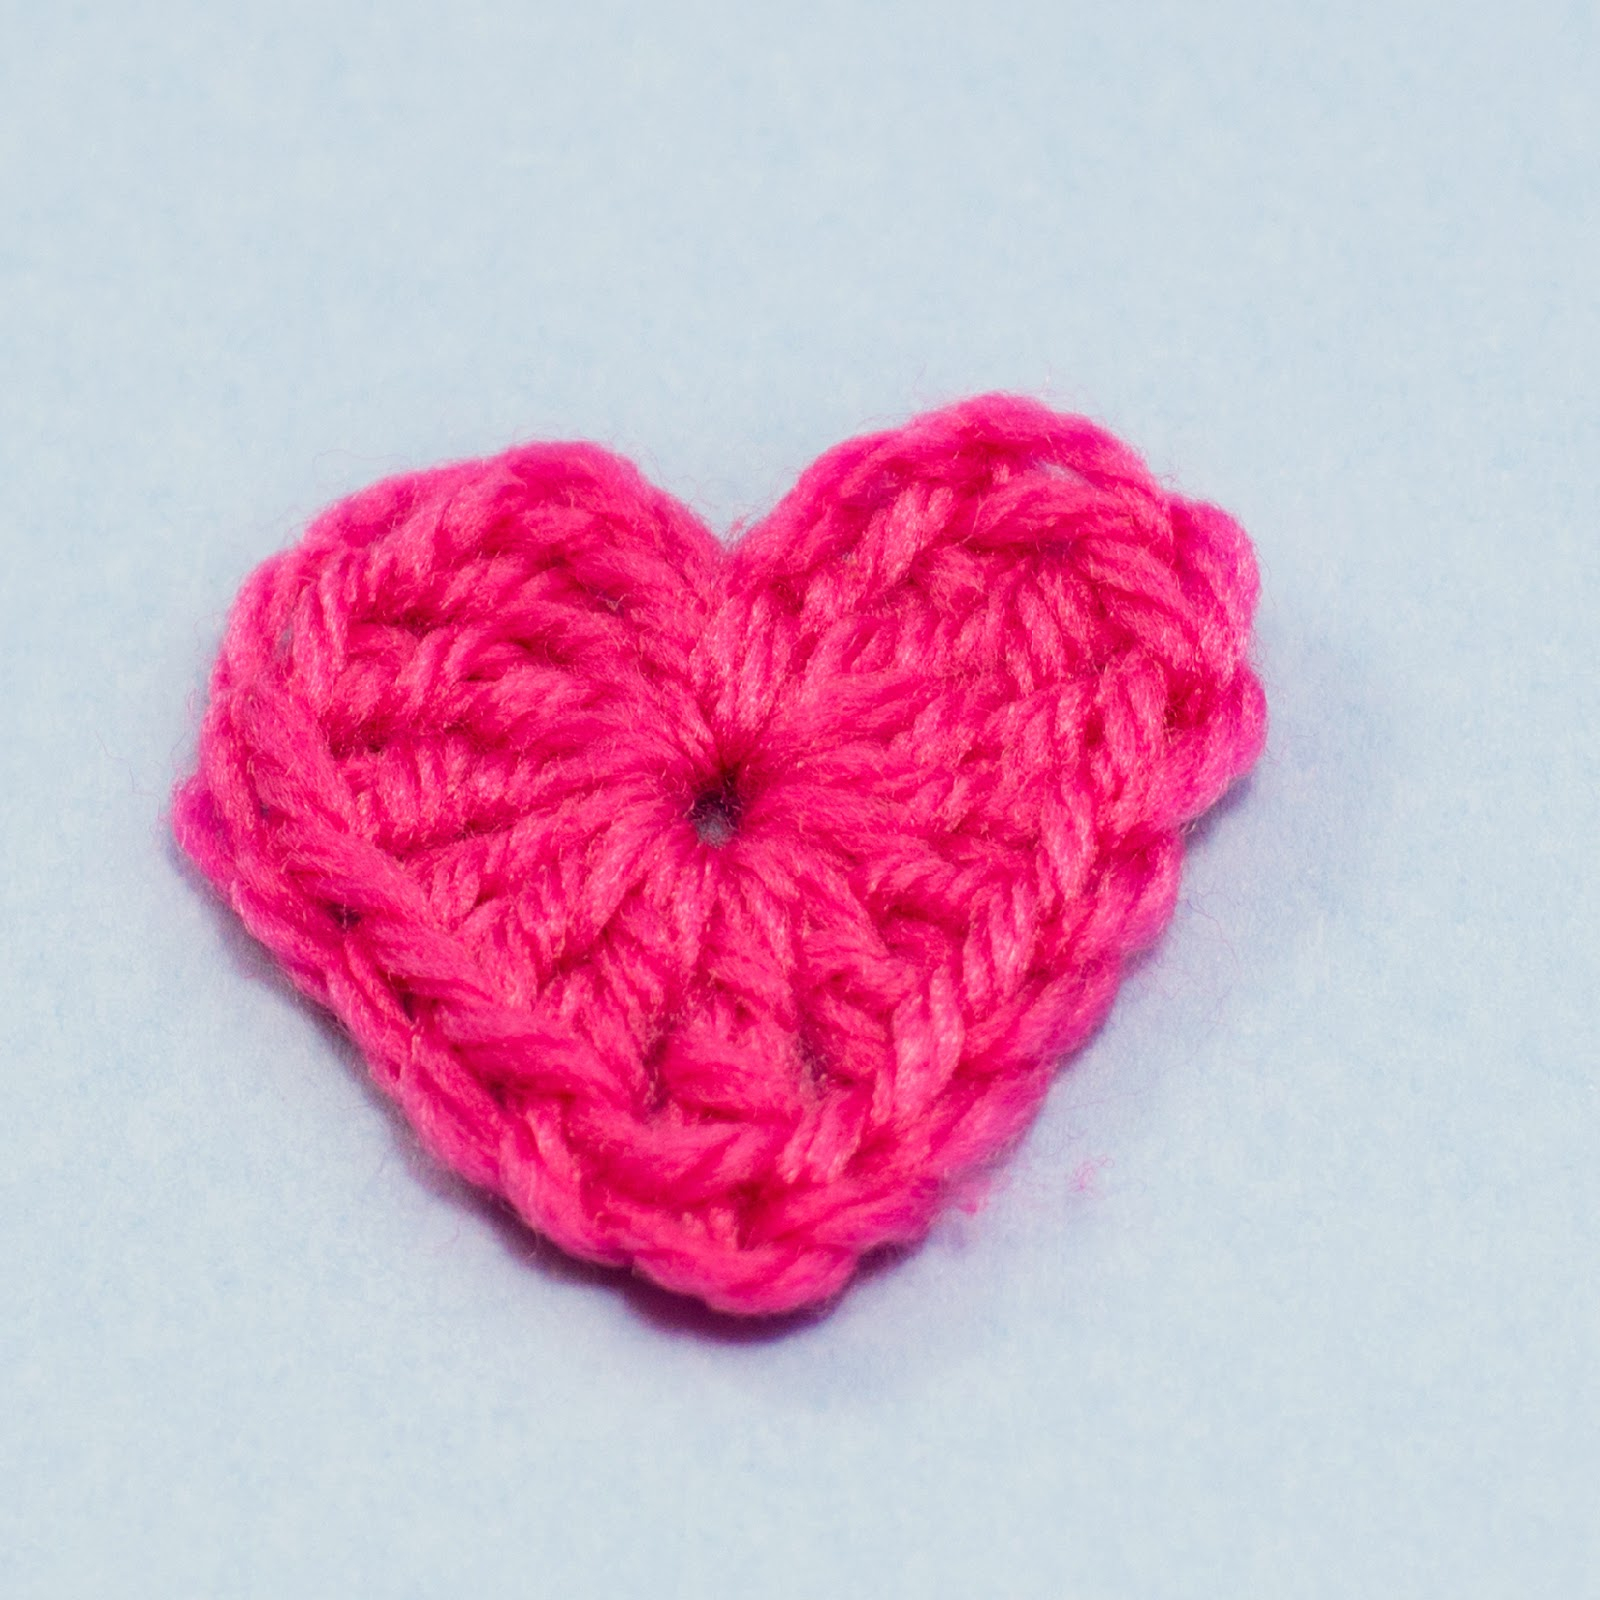 Crochet Heart Patterns Basic Small Heart Interweave